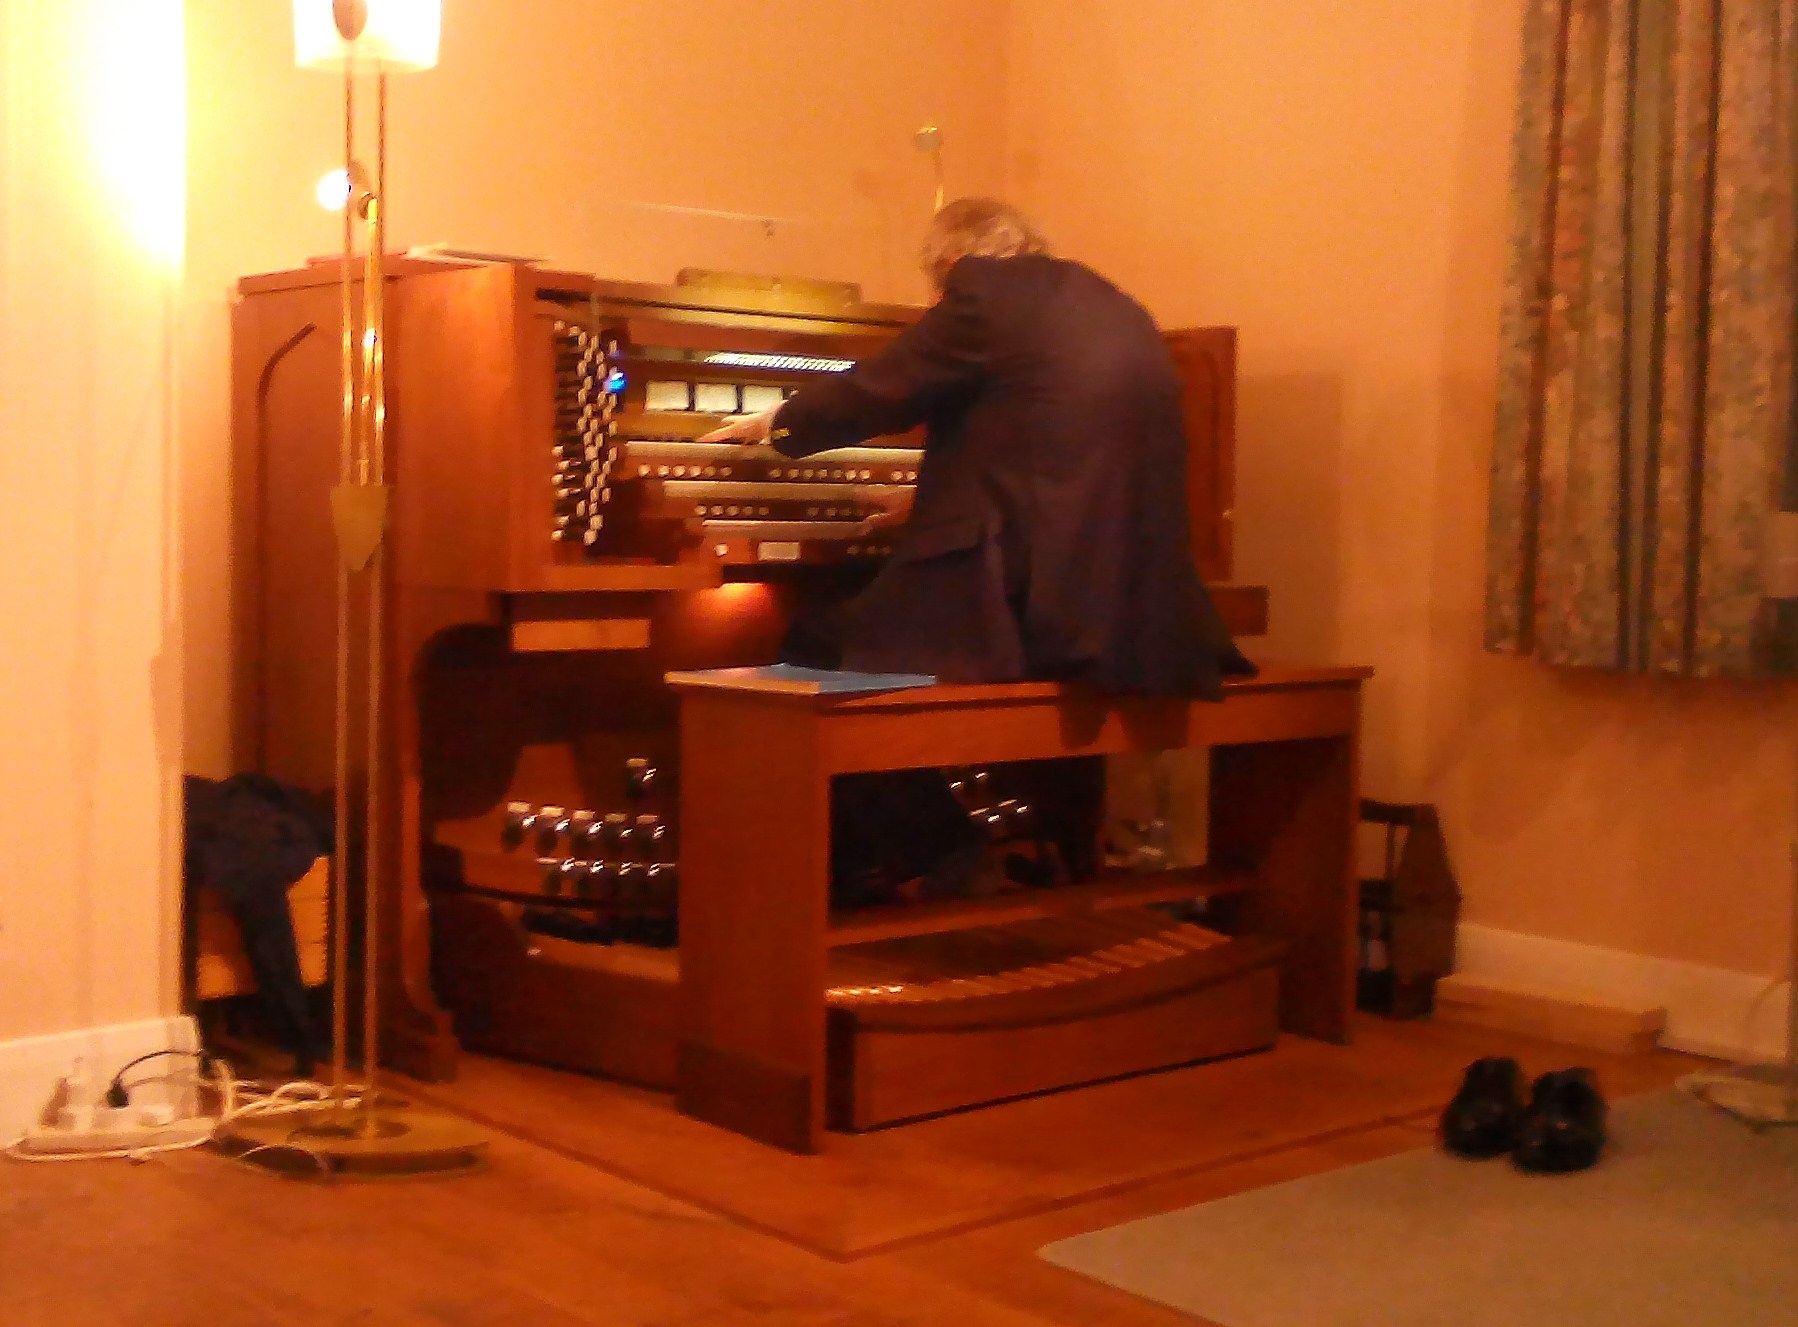 Image: Peter playing the organ